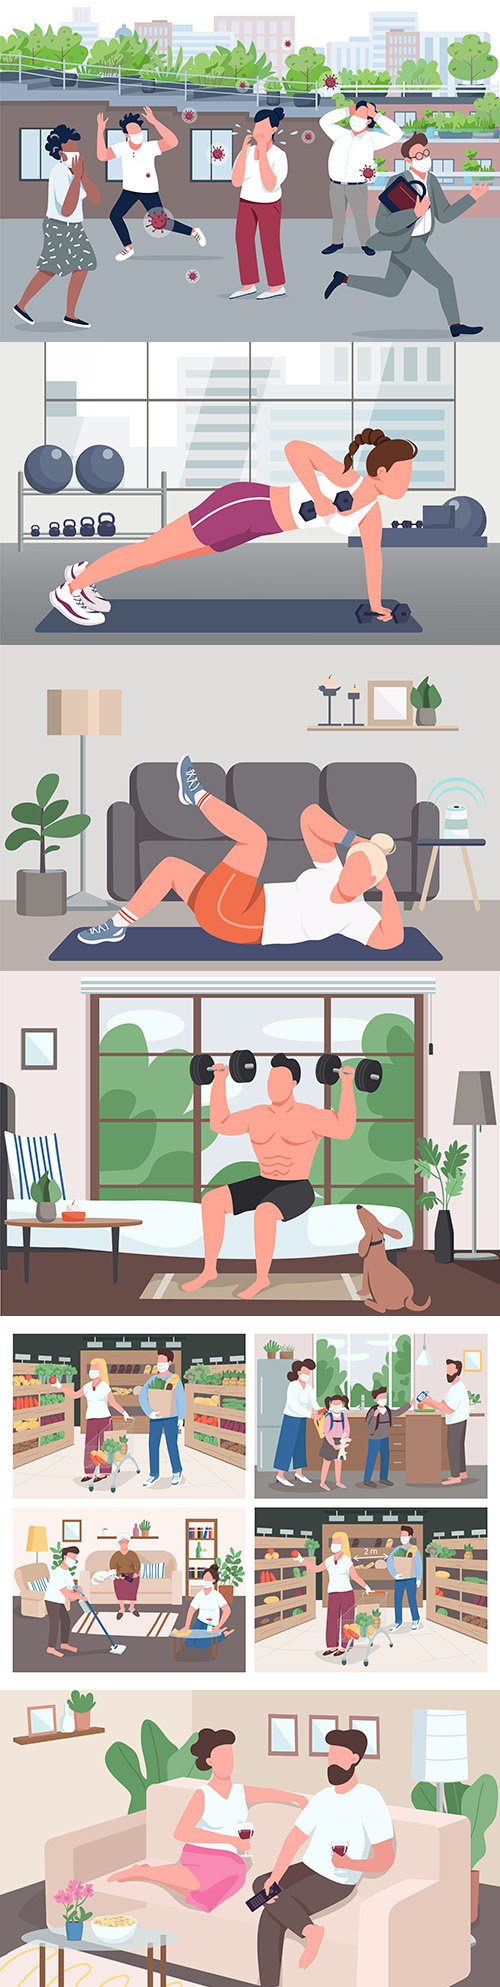 Fitness and home training in quarantine cartoon illustration